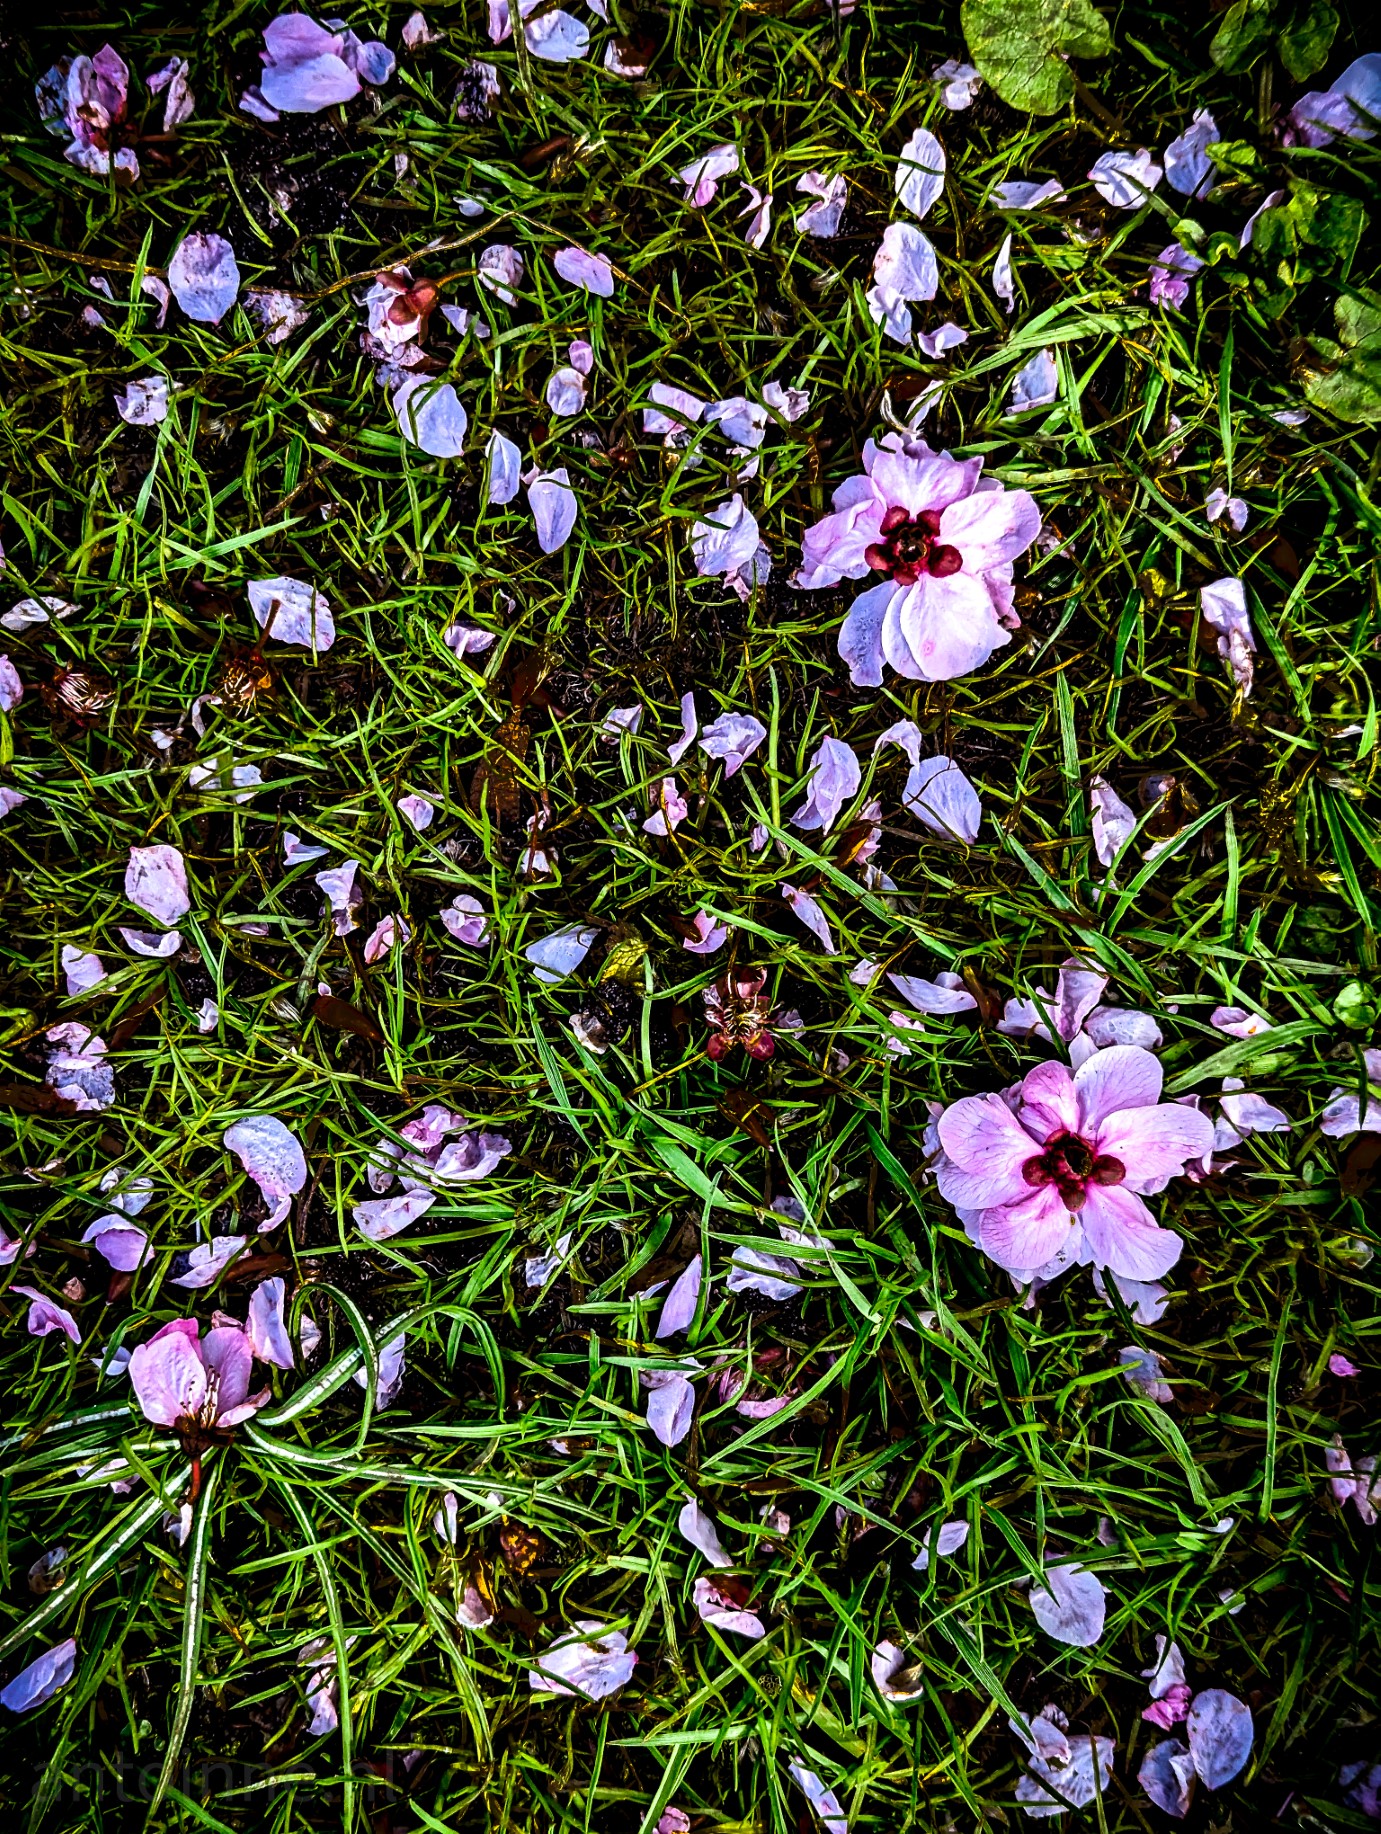 Pink petals blown into the green grass.